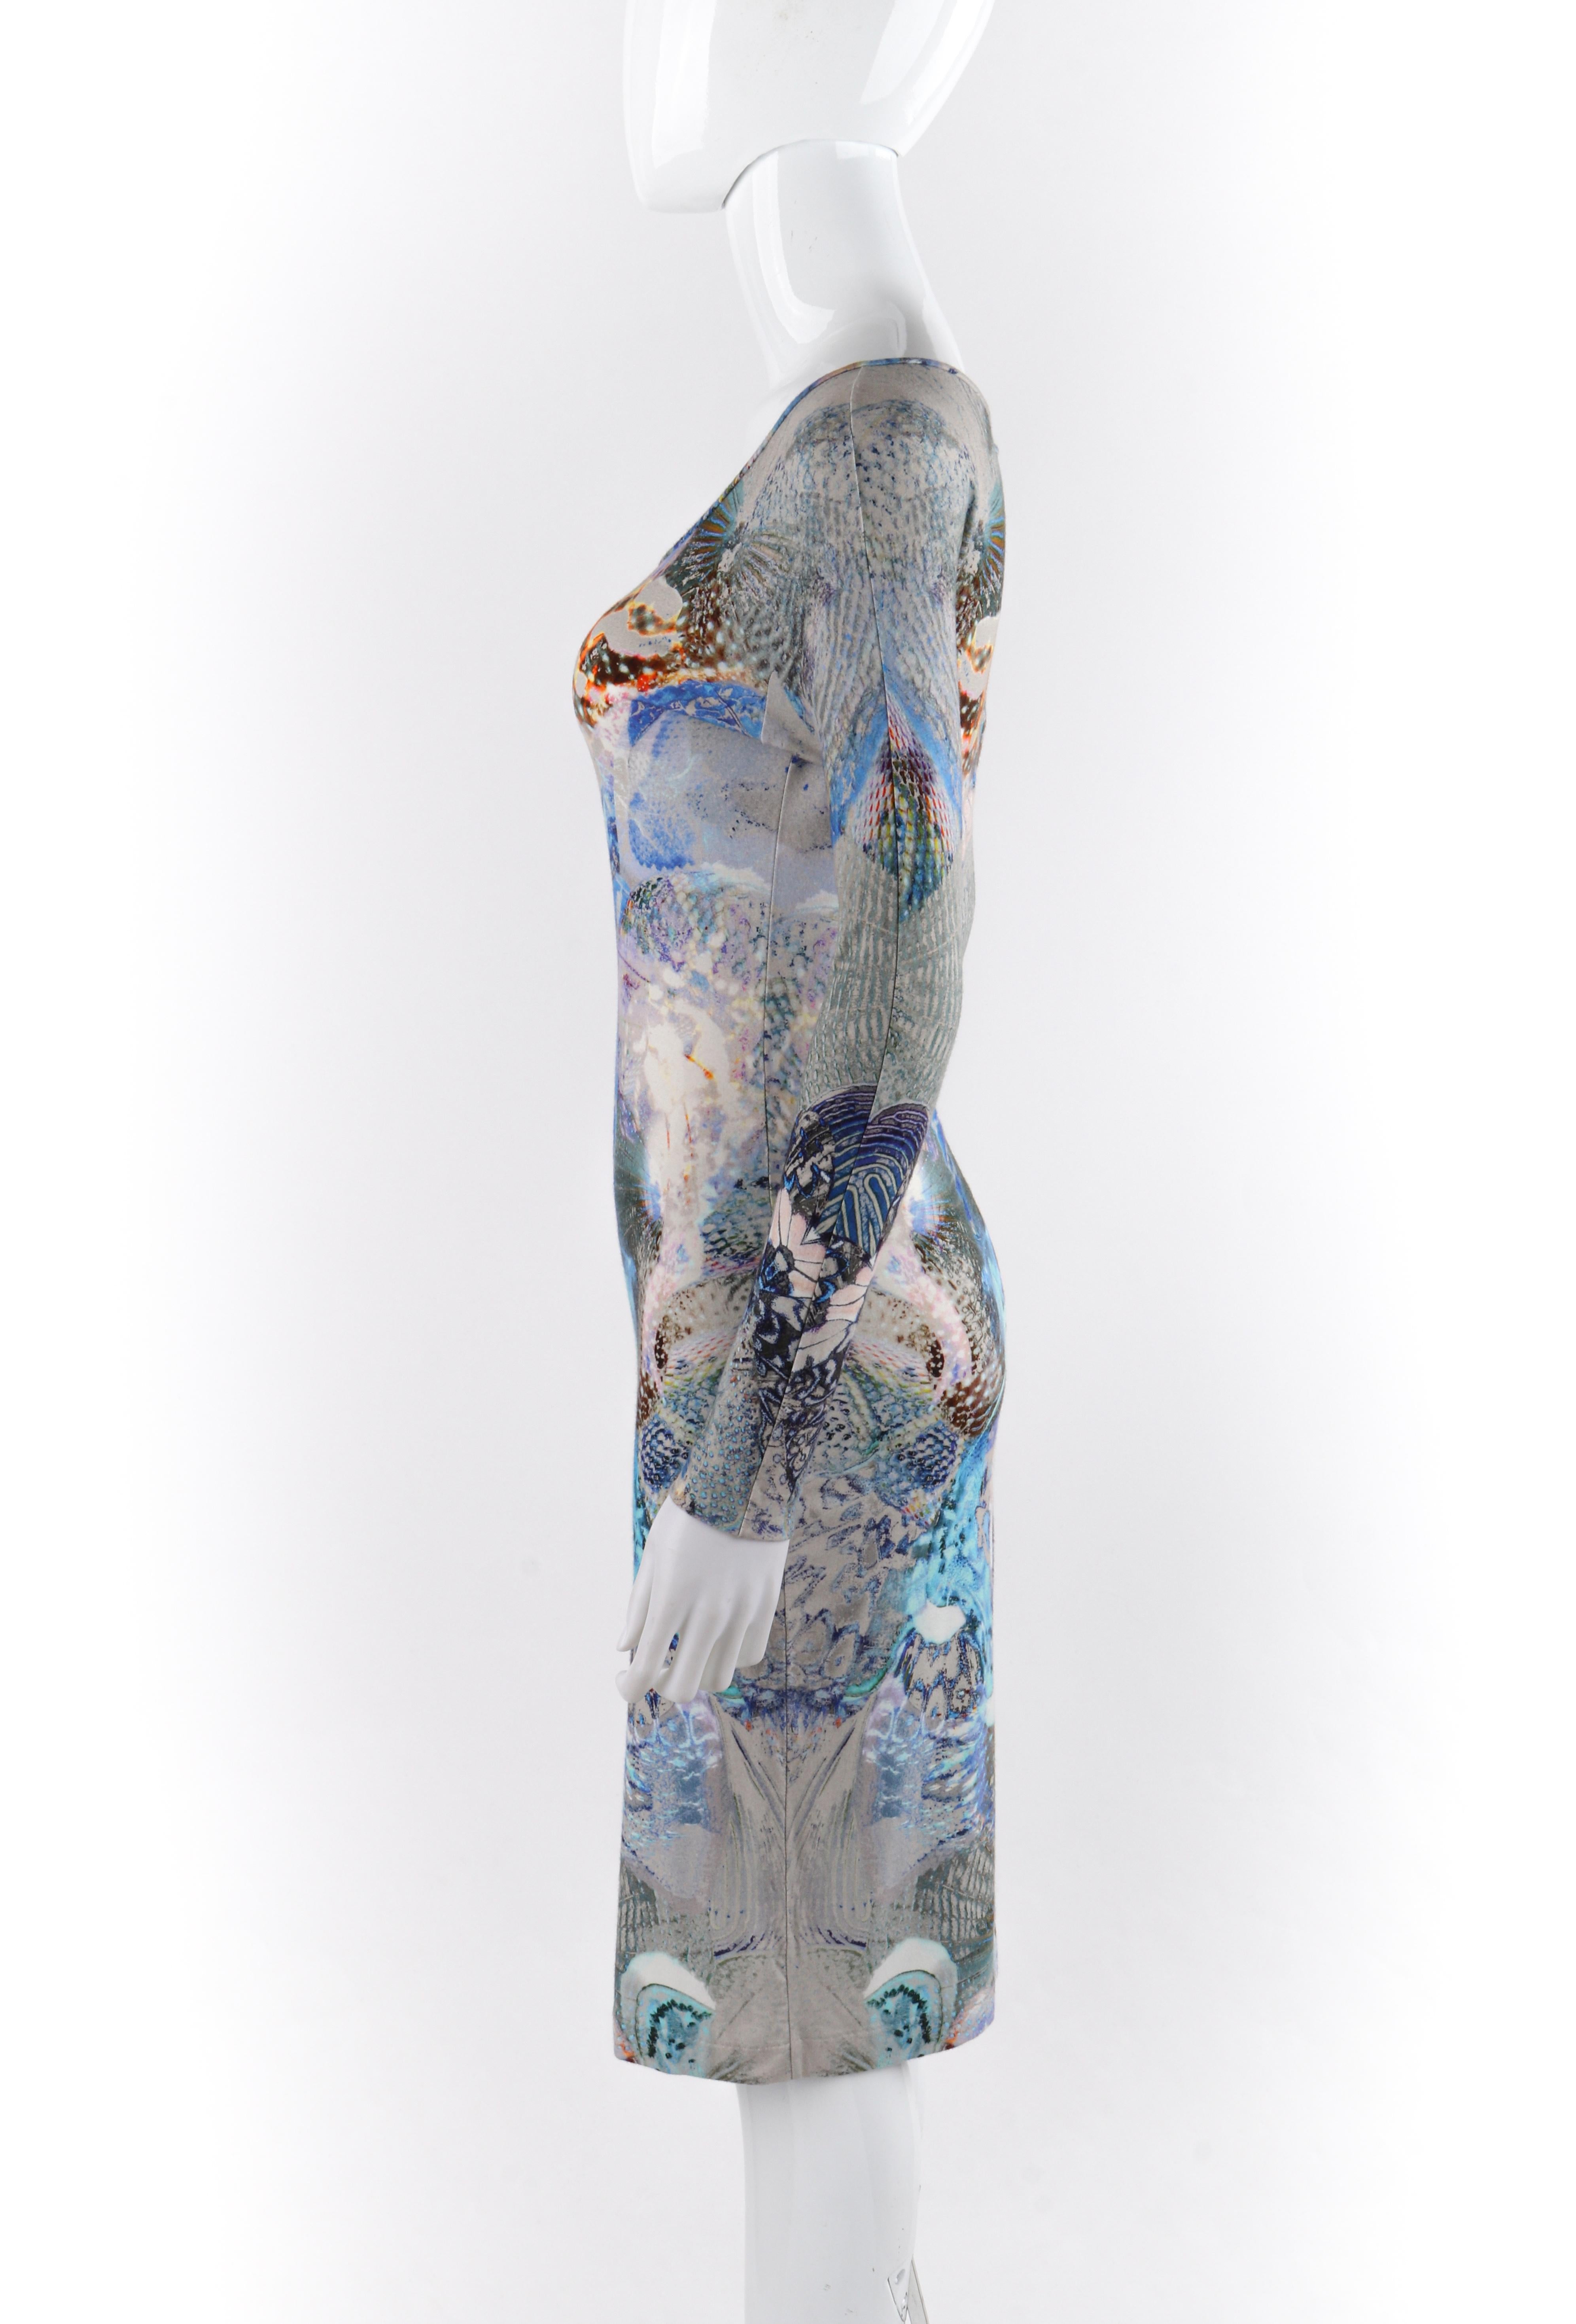 ALEXANDER McQUEEN S/S 2010 “Plato’s Atlantis” Gray Jellyfish Print Sheath Dress In Good Condition For Sale In Thiensville, WI